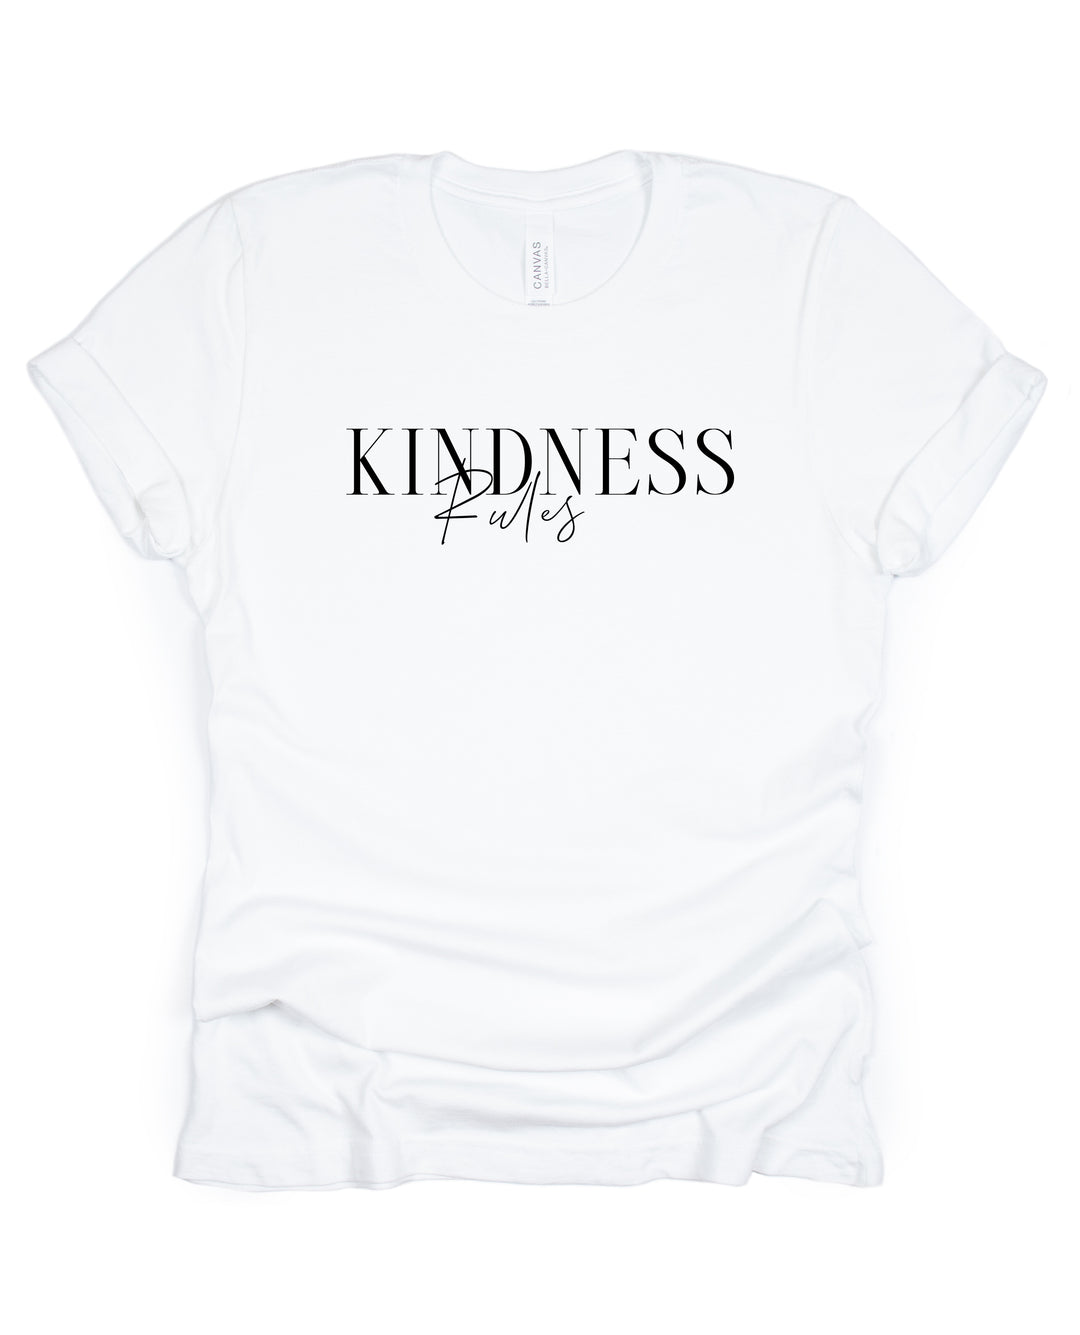 Kindness Rules - Unisex Crew-Neck Tee - Joy & Country